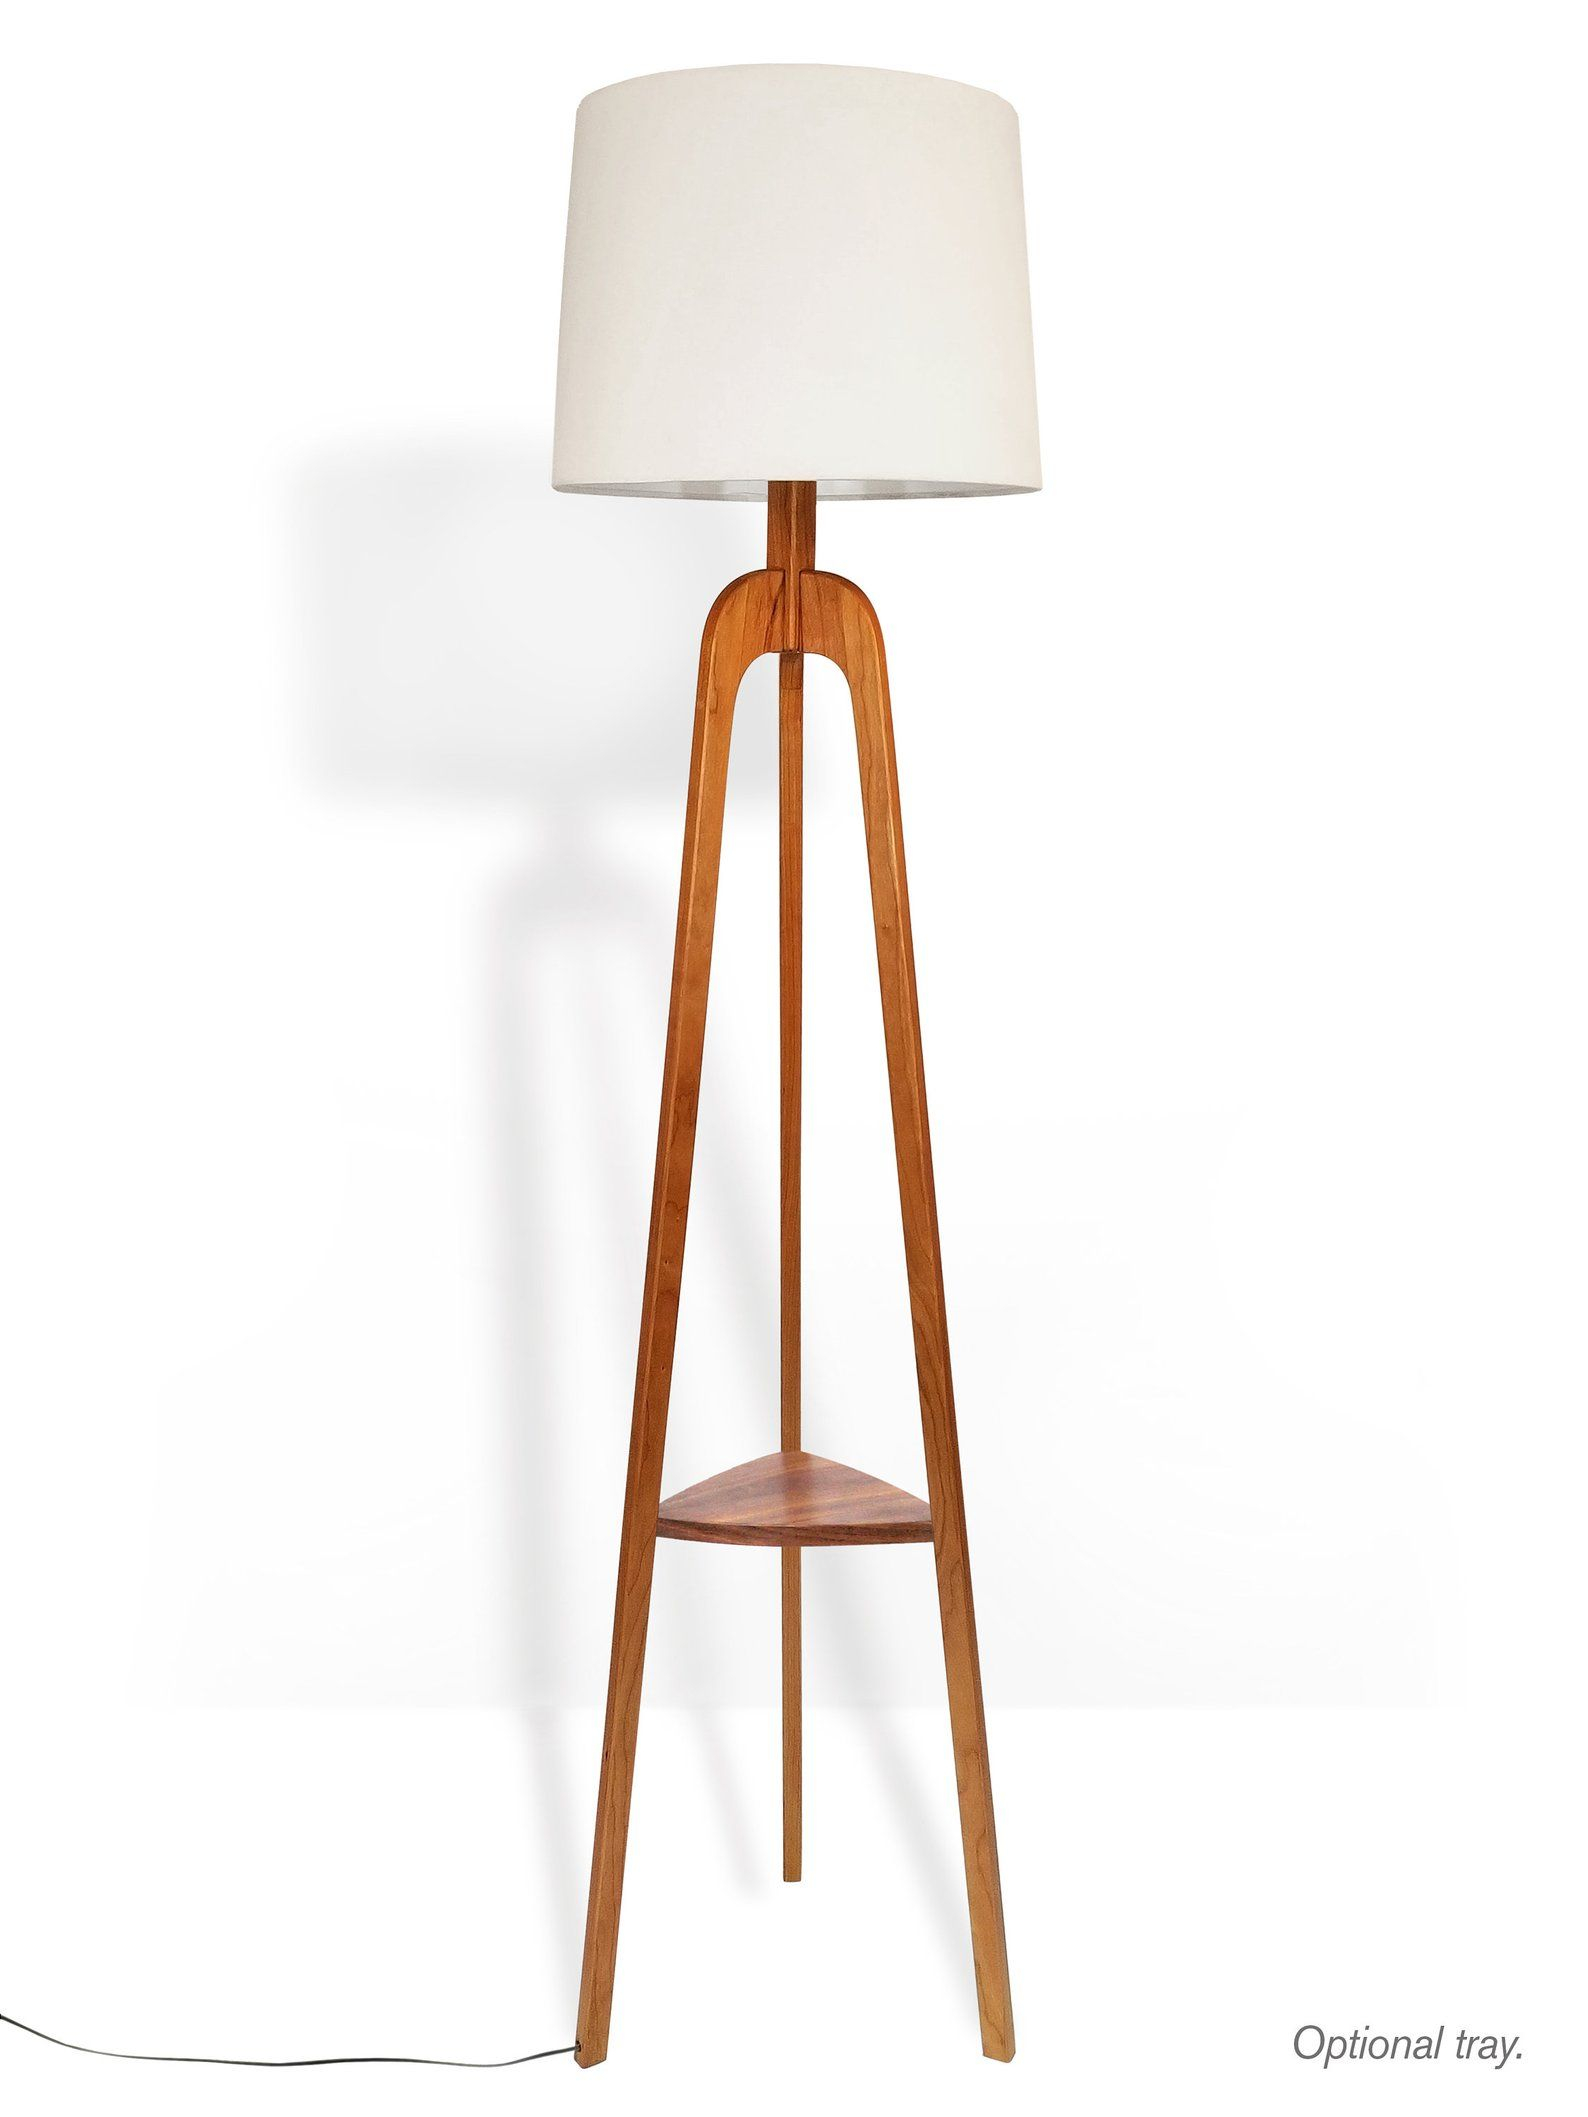 Floor Lamp Danish Modern Tripod Lamp Cherry Etsy In 2019 regarding dimensions 1588 X 2117